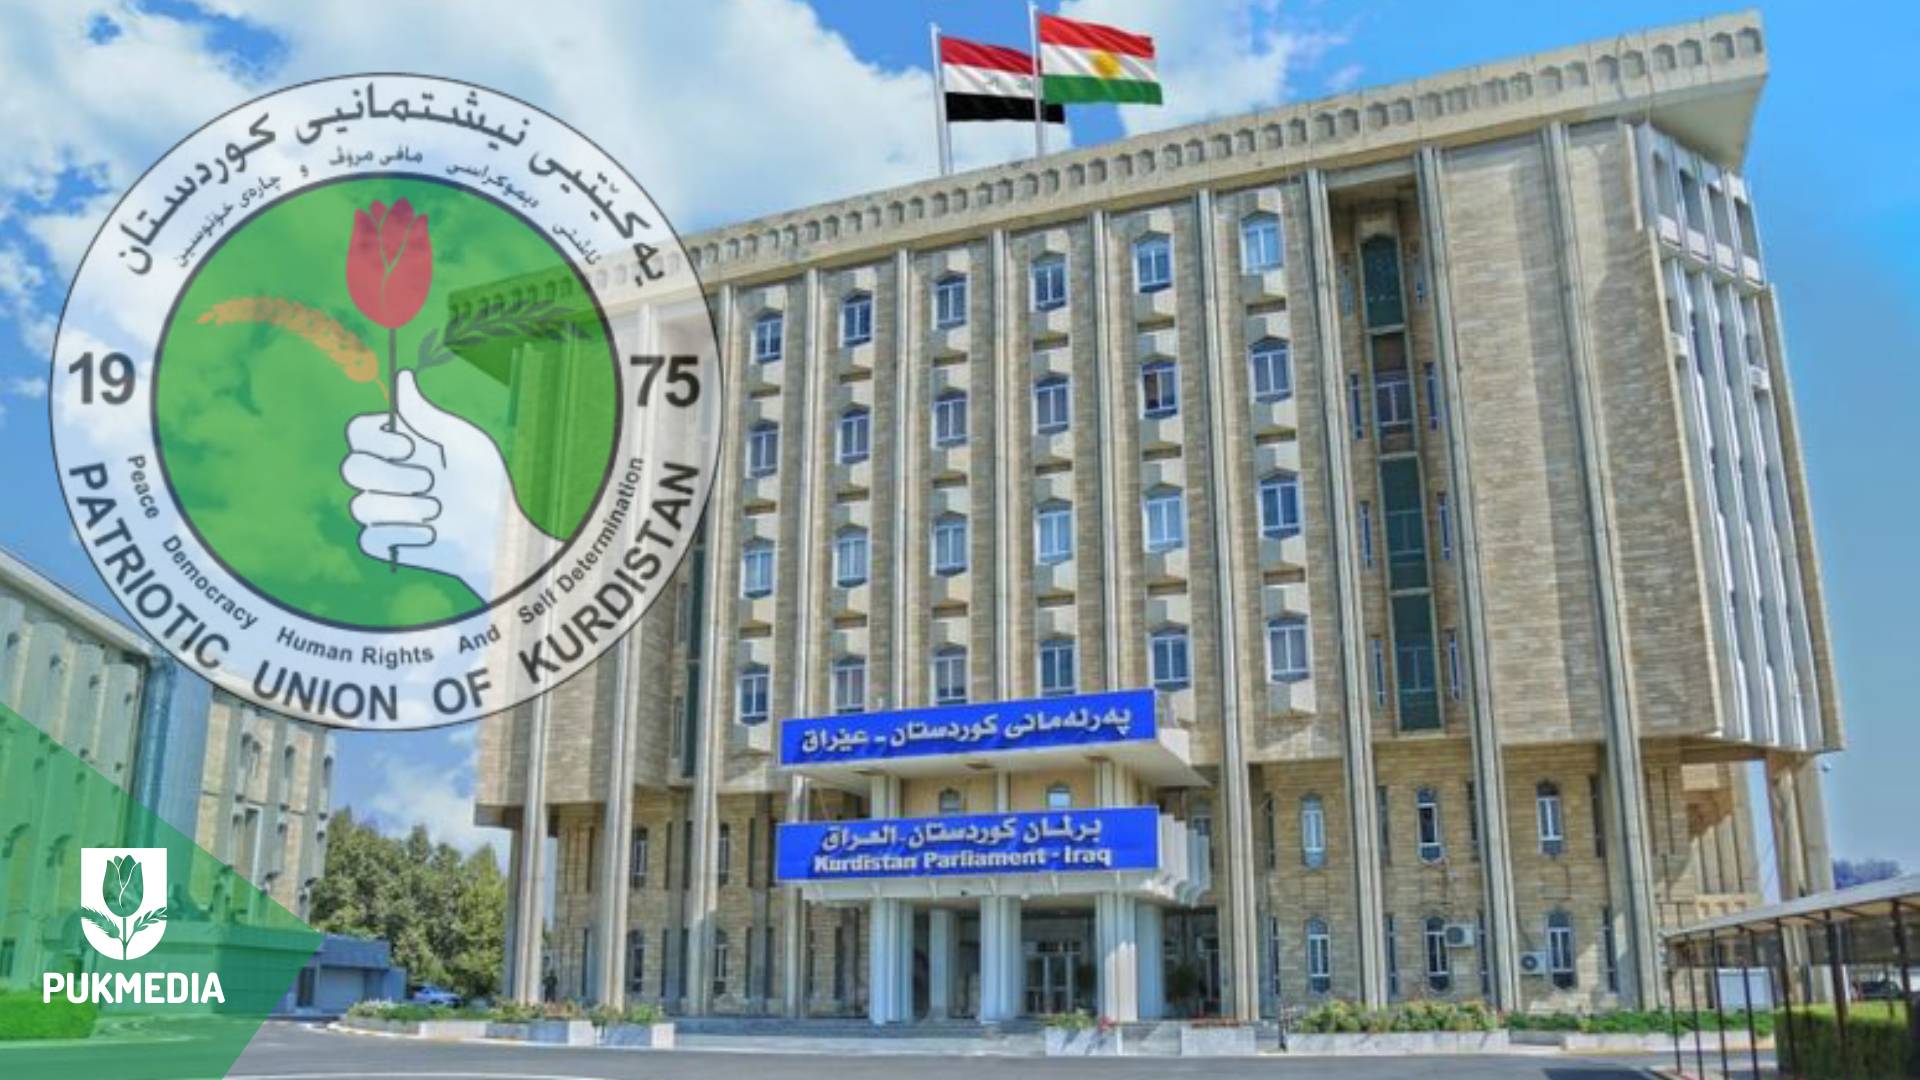 PUK logo with Kurdistan Parliament building 